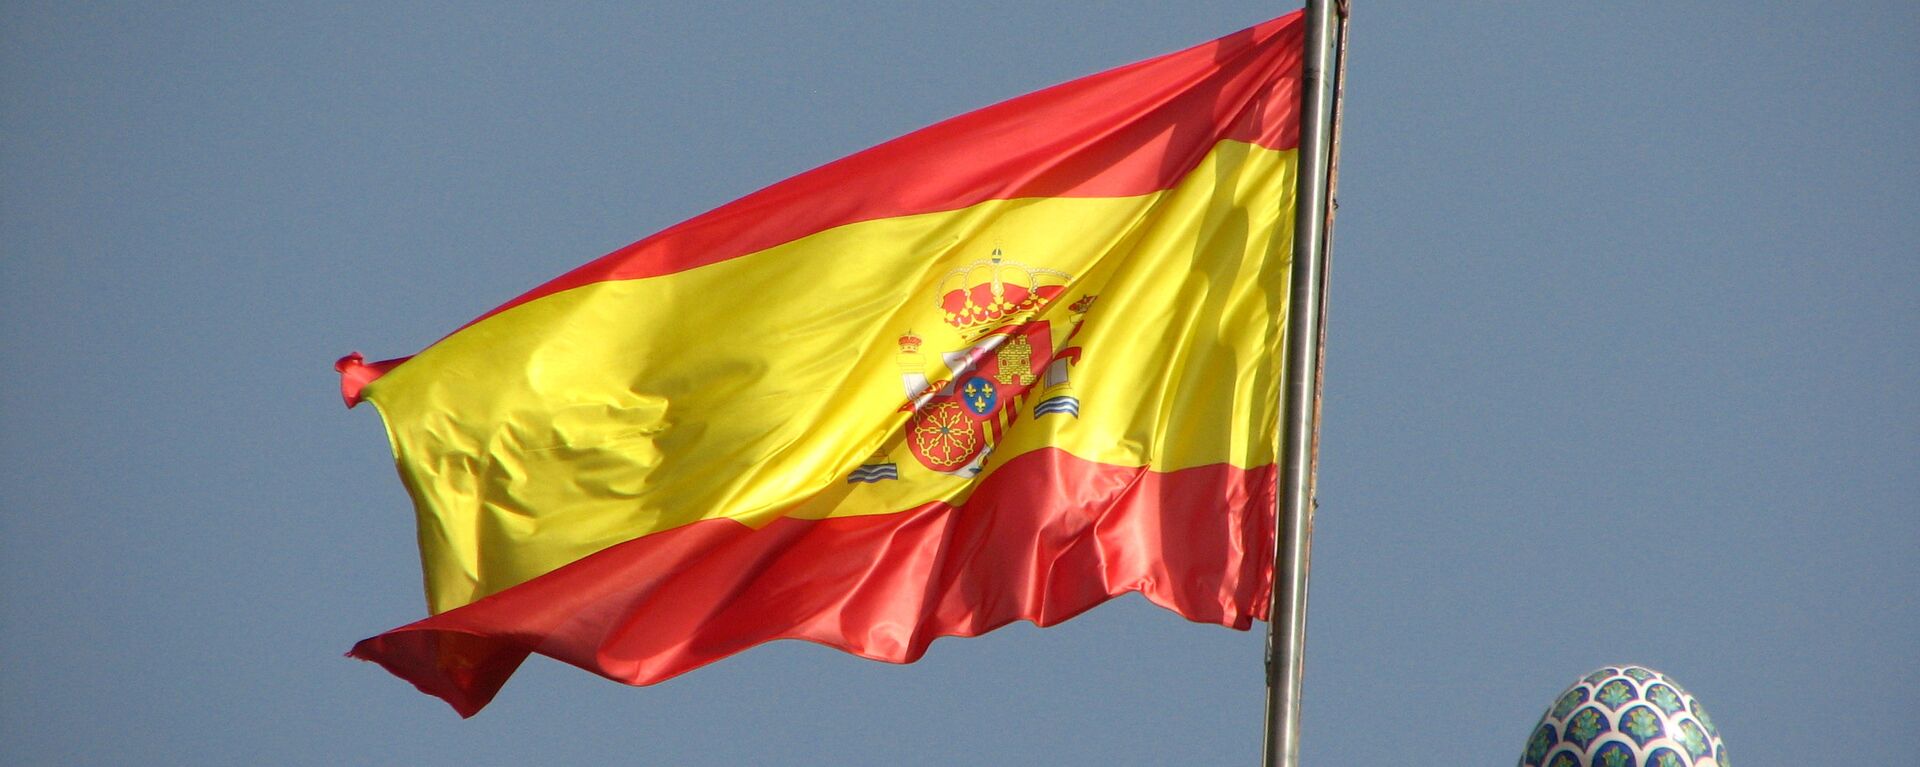 Bandera de España - Sputnik Mundo, 1920, 02.03.2021